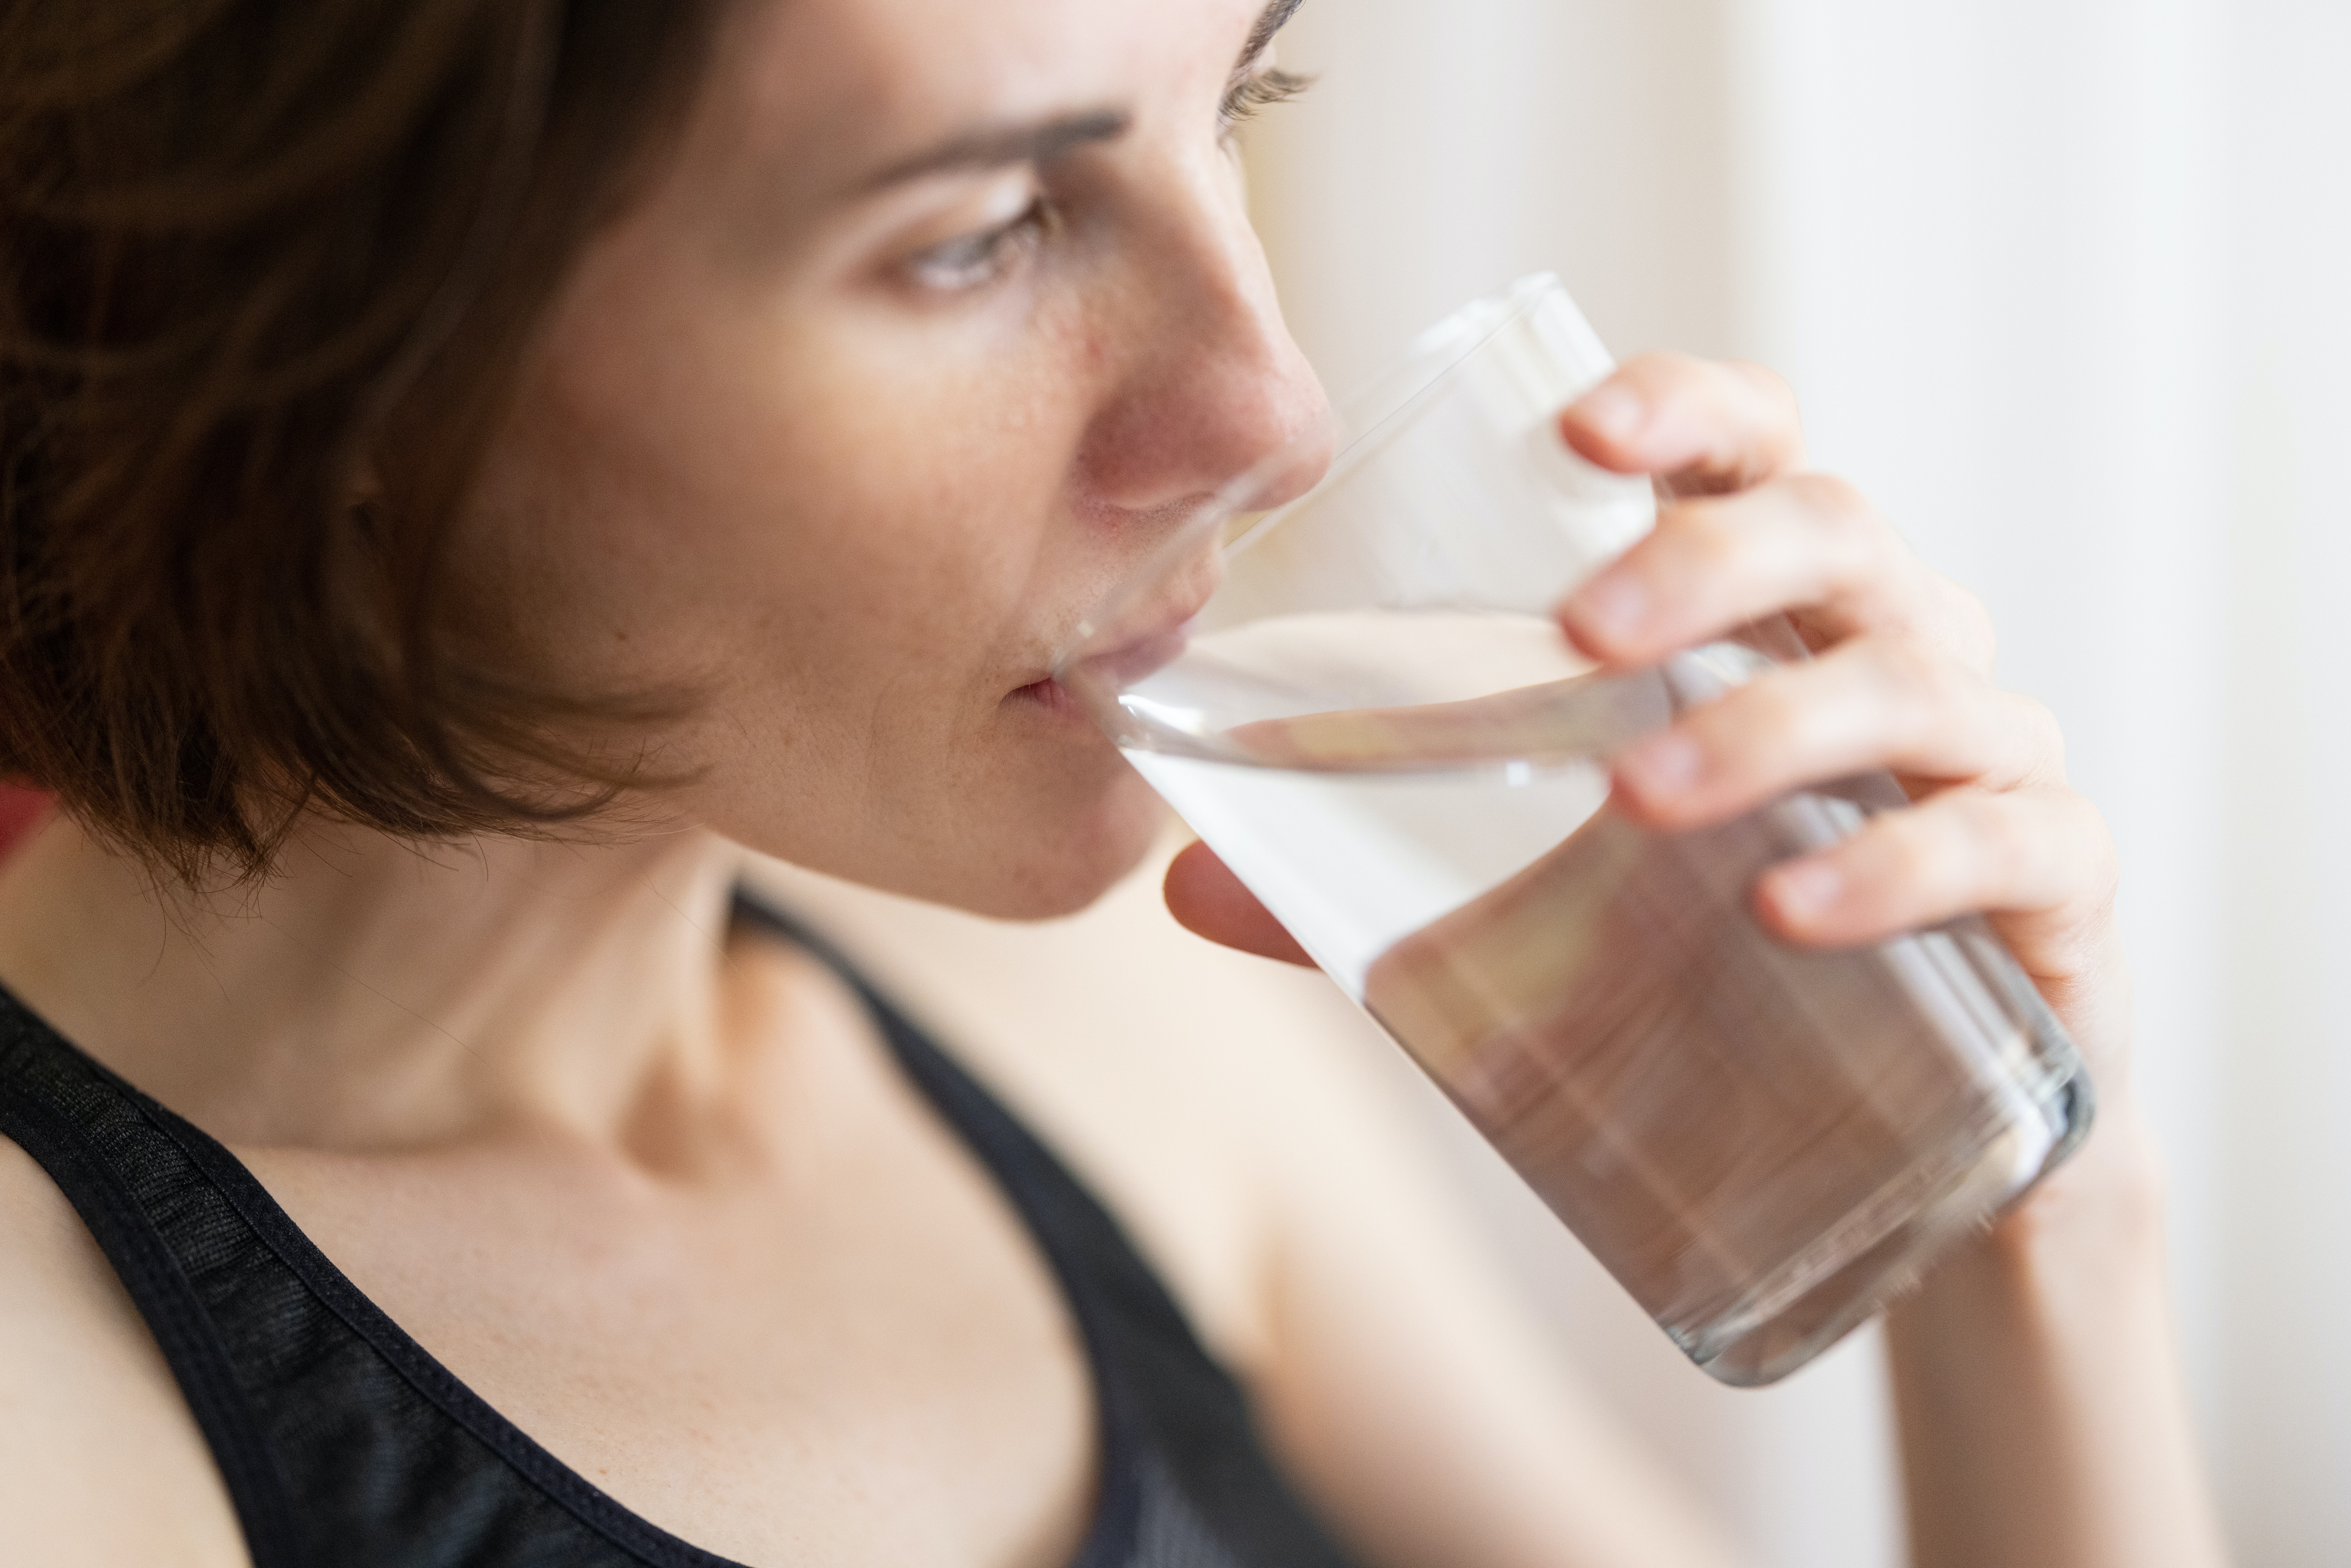 Dark haired woman drinking water